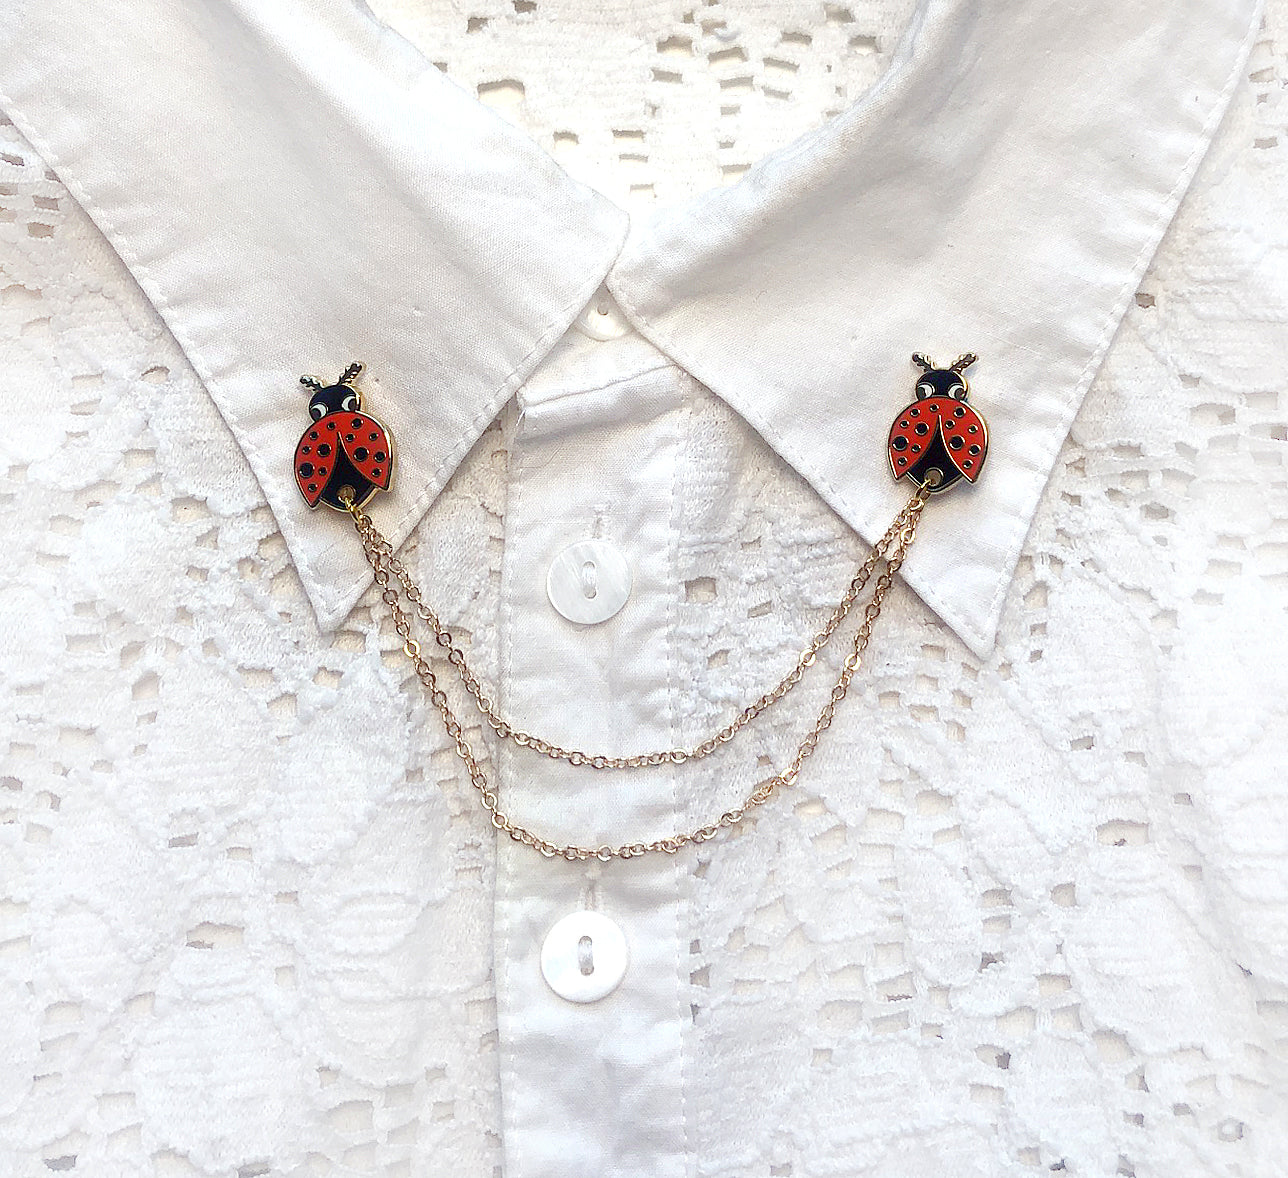 Red Ladybug- Collar Pins